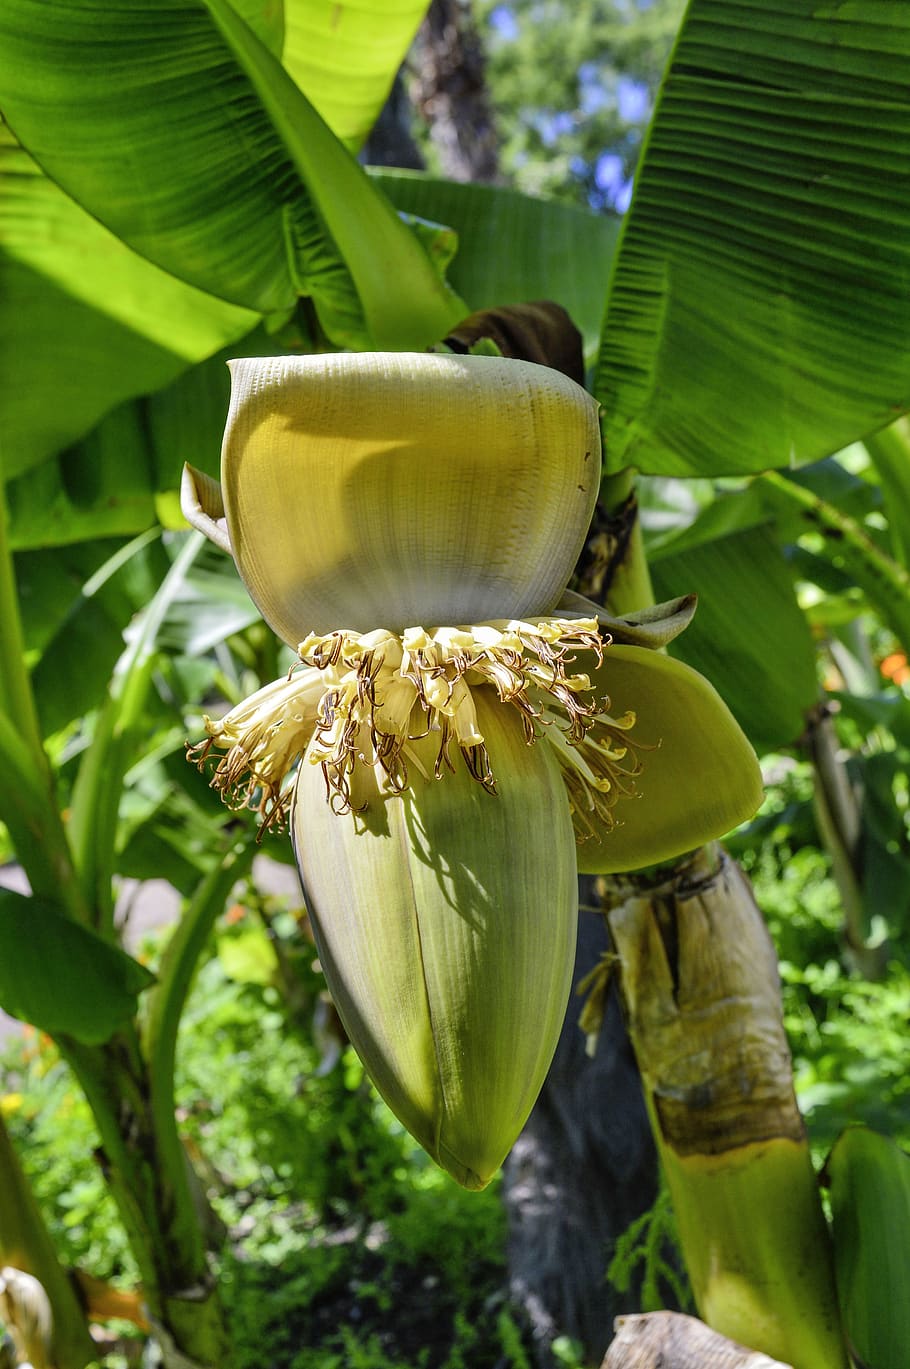 fiber banana, banana, blossom, bloom, plant, herbaceous, banana shrub, banana plant, tropical, banana flower